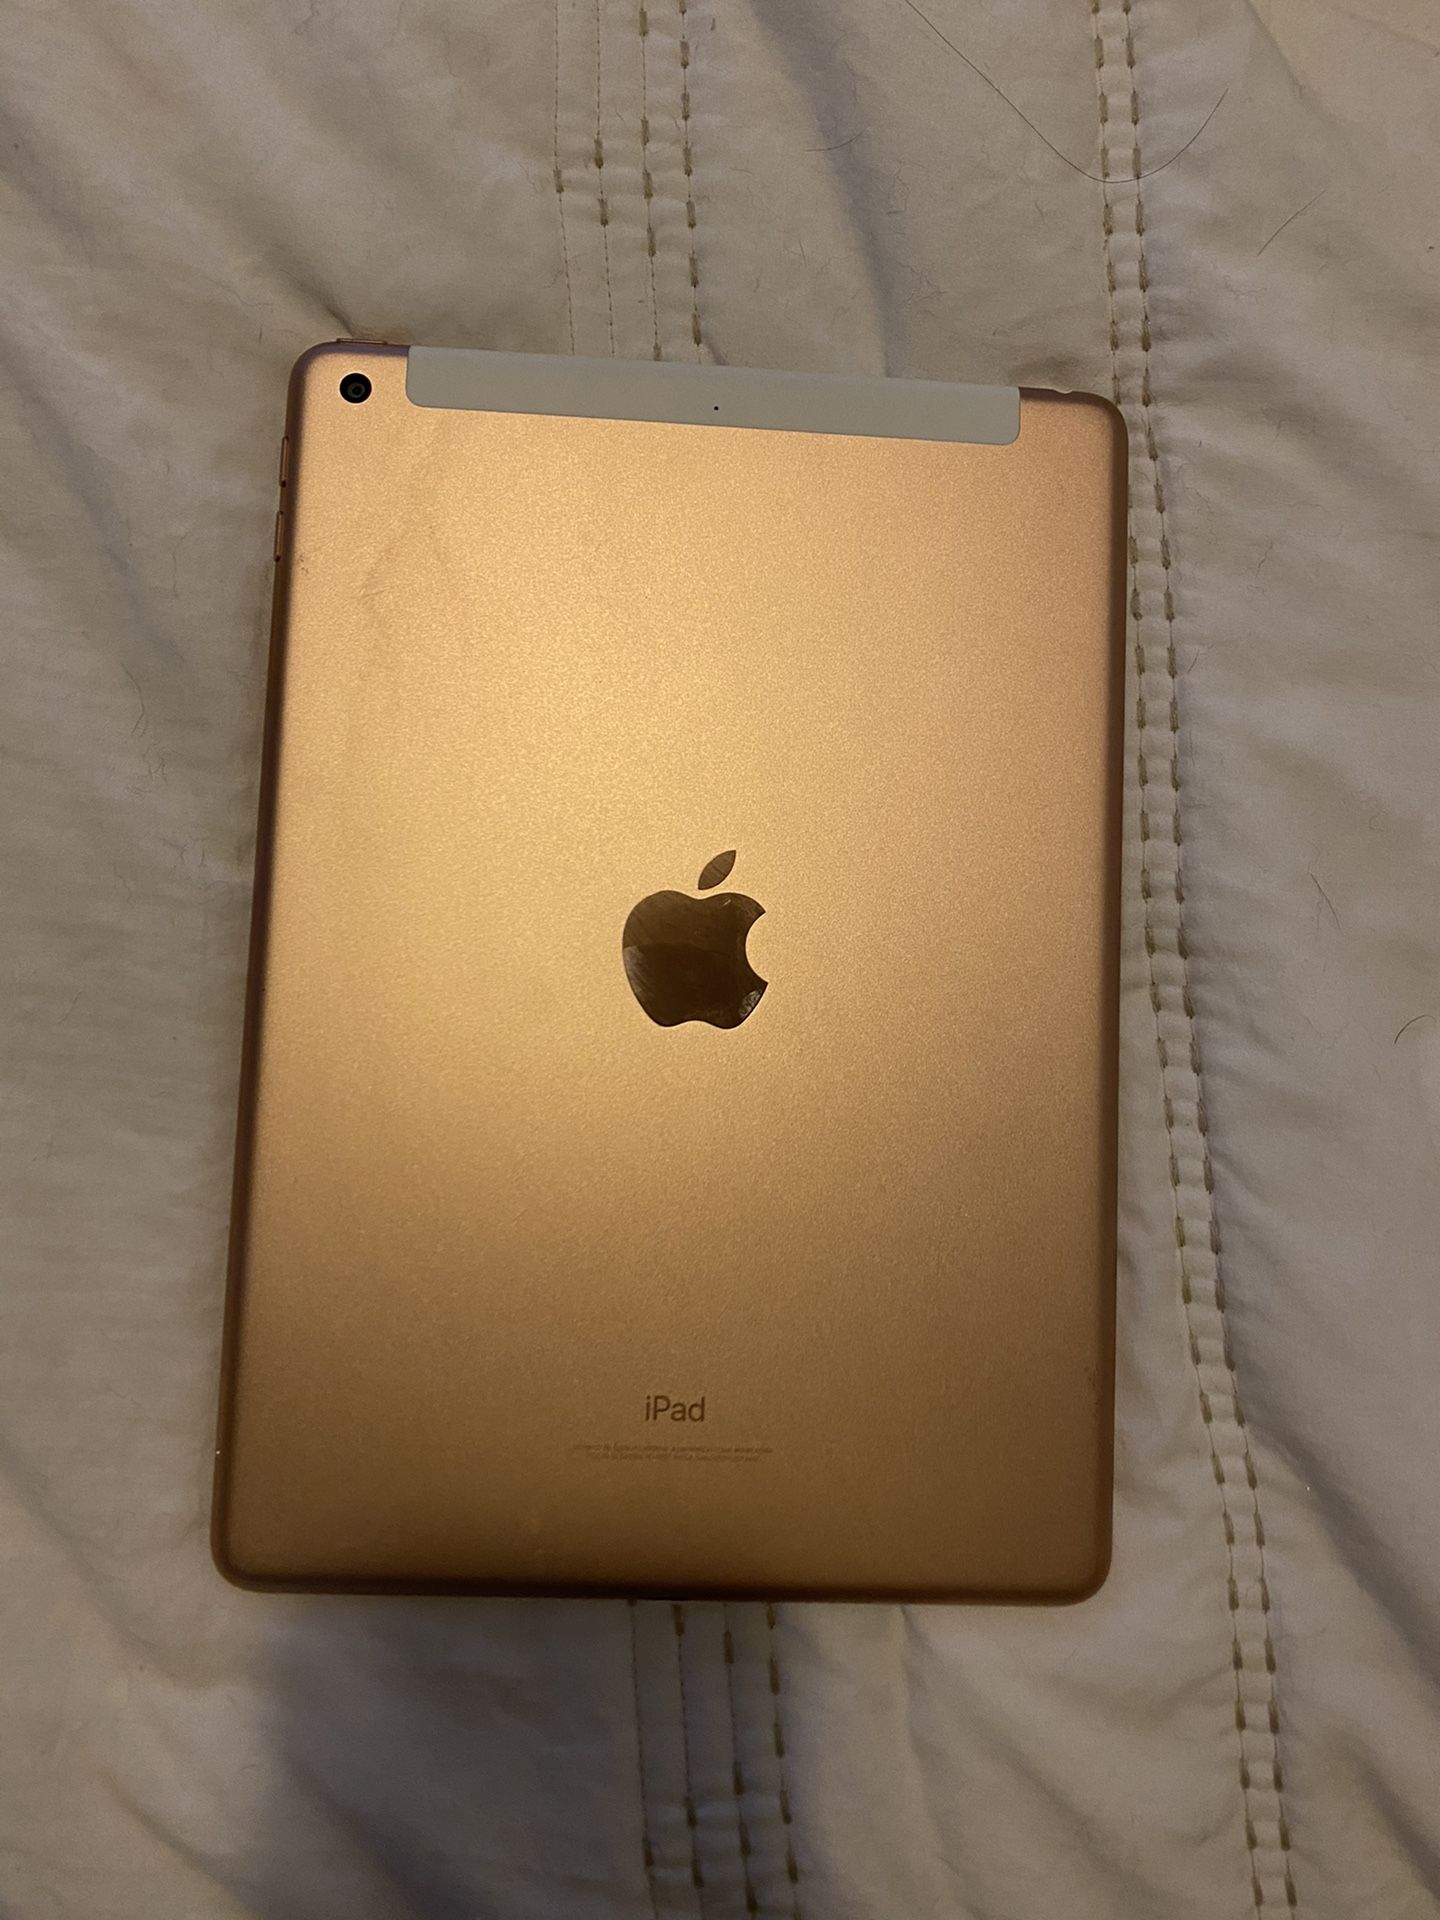 iPad 32g gold like new